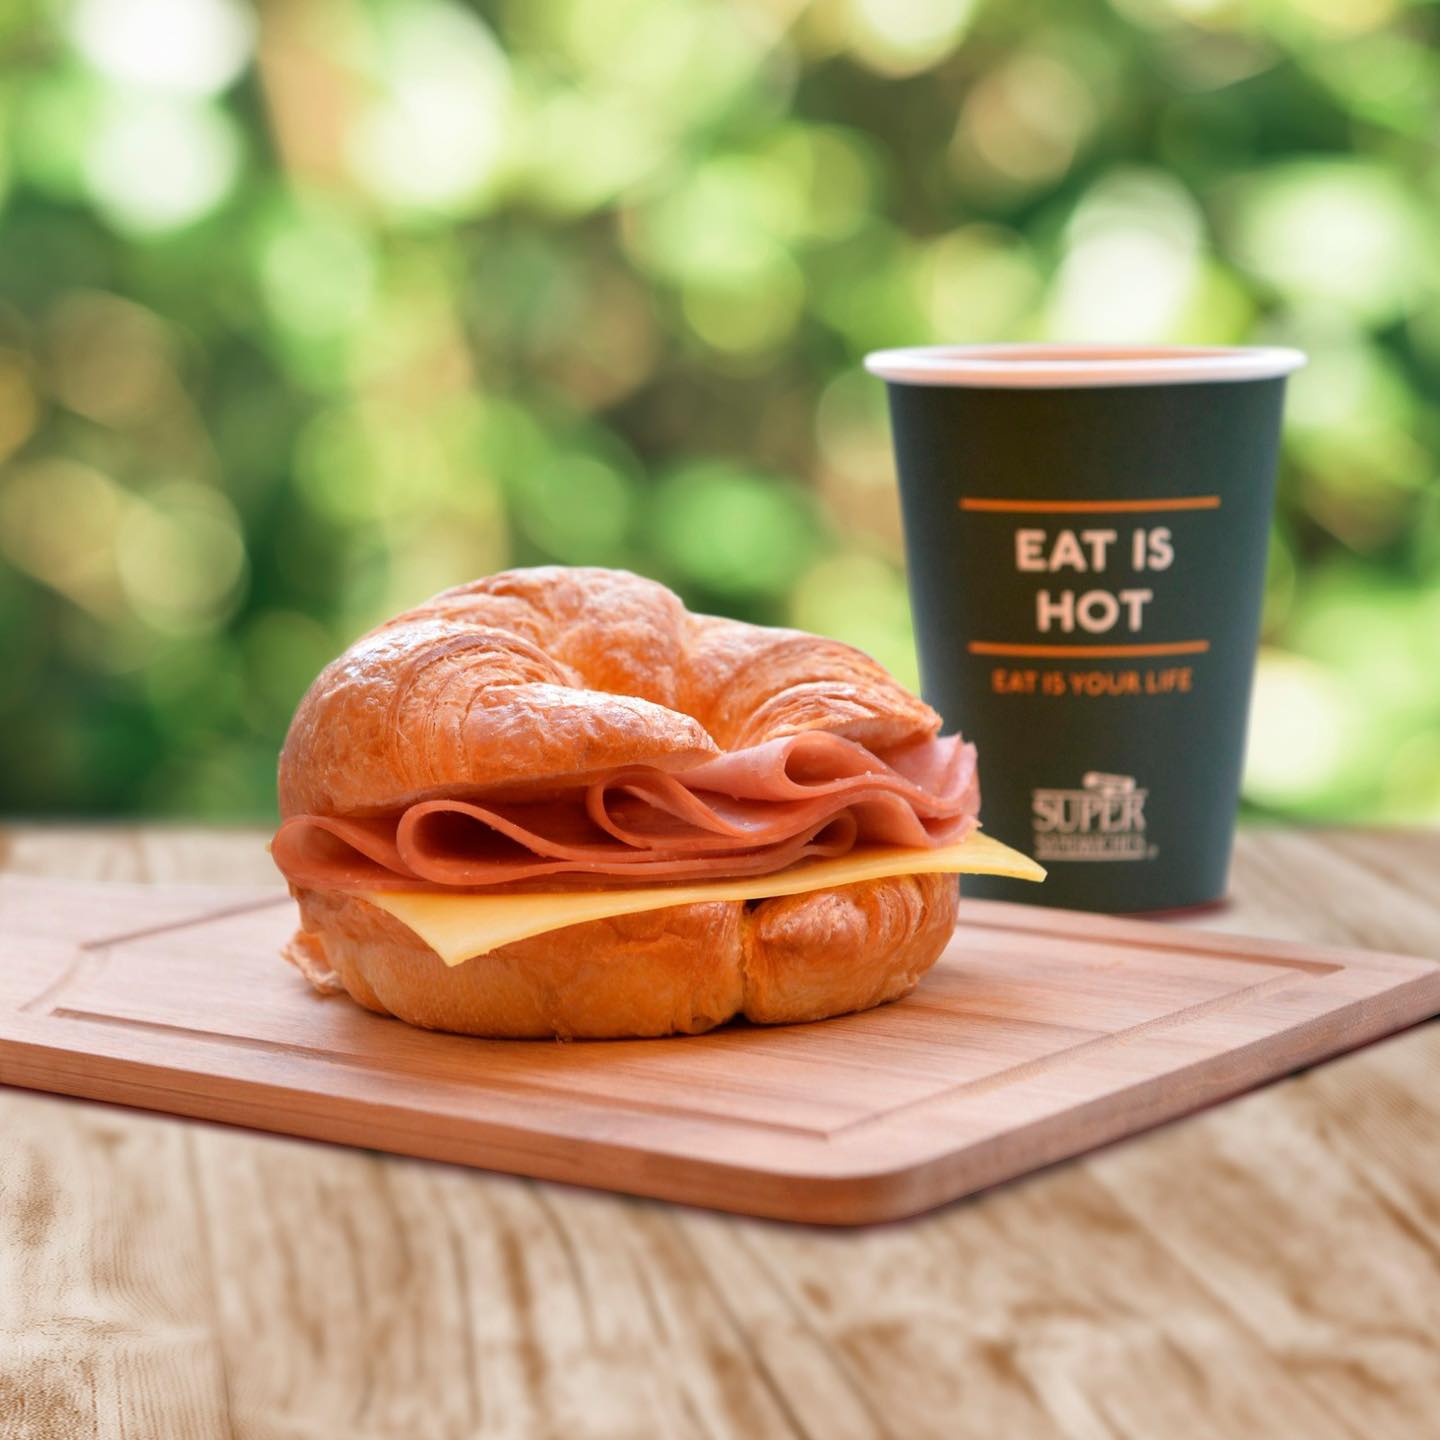 今日早餐不如就來一個蜜味火腿車打芝士牛角包吧！配搭簡單但滋味非常，為你展開一個美好的週末！ Let's have a simple but tasty Honey Ham & Cheddar Cheese Croissant for your breakfast today! to start you weekend now !